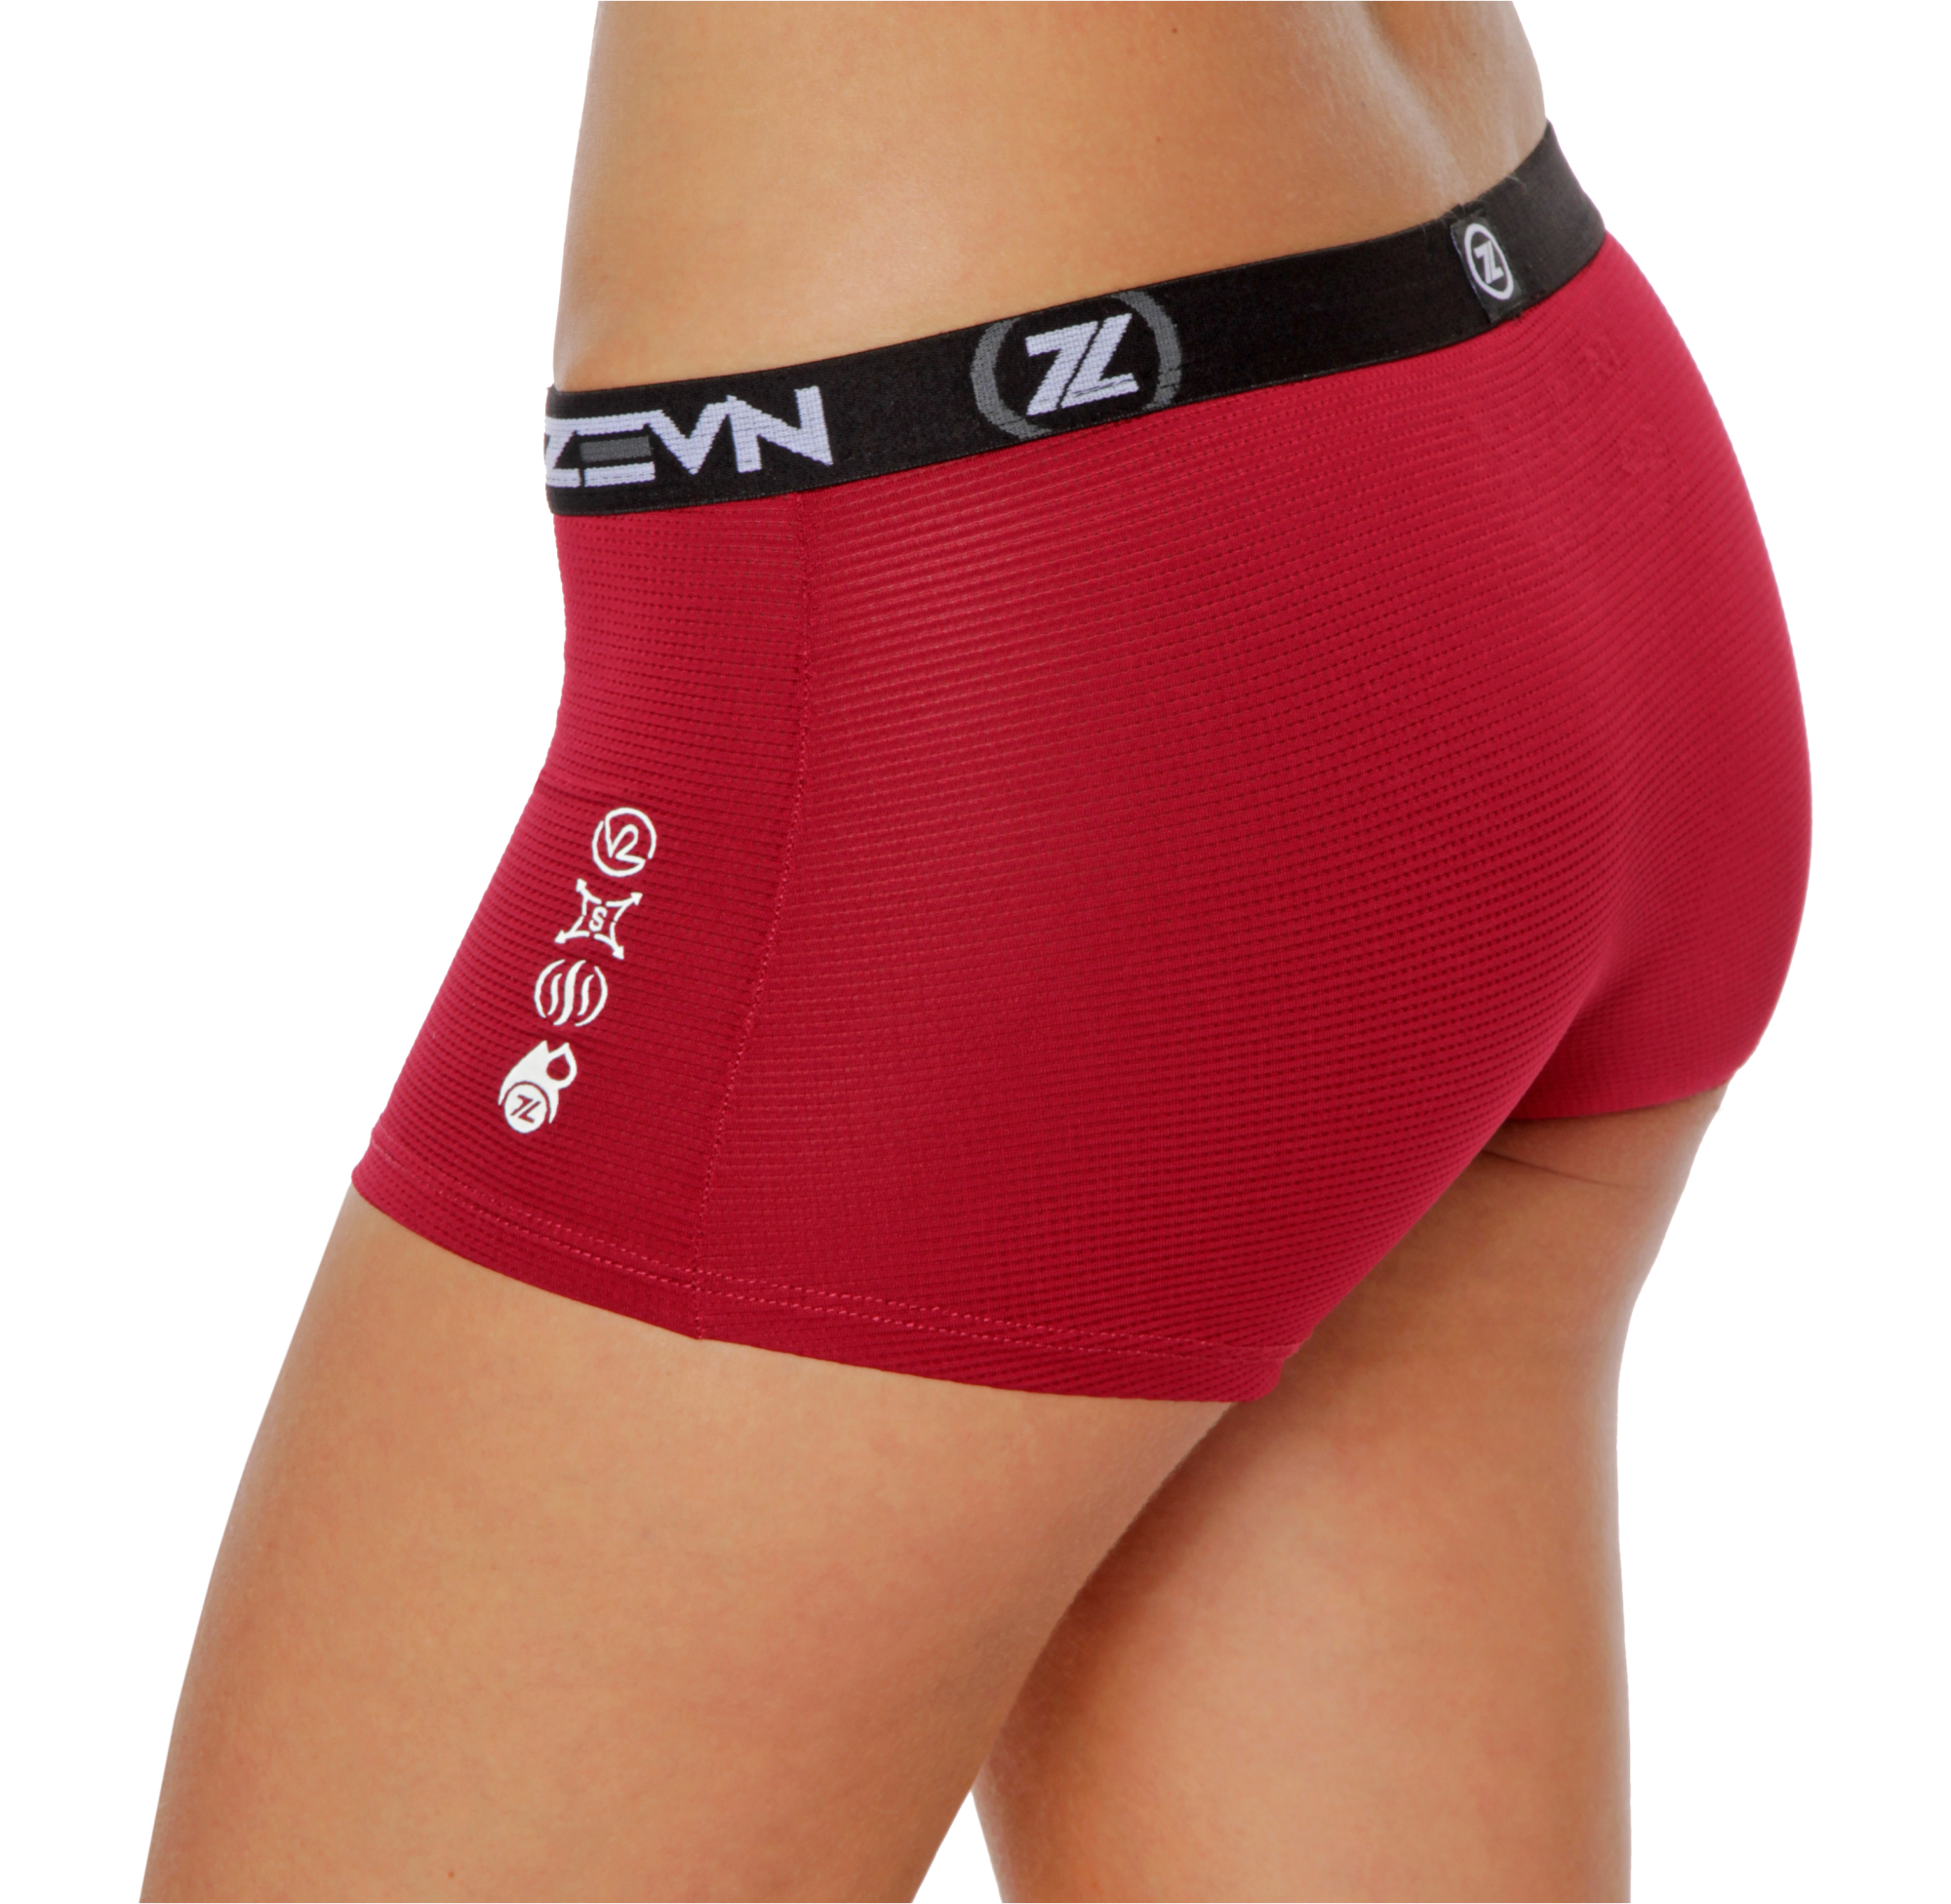 Anti Odor Underwear For Women: ZVW Airmesh ZEVN – ZEVN USA Sports